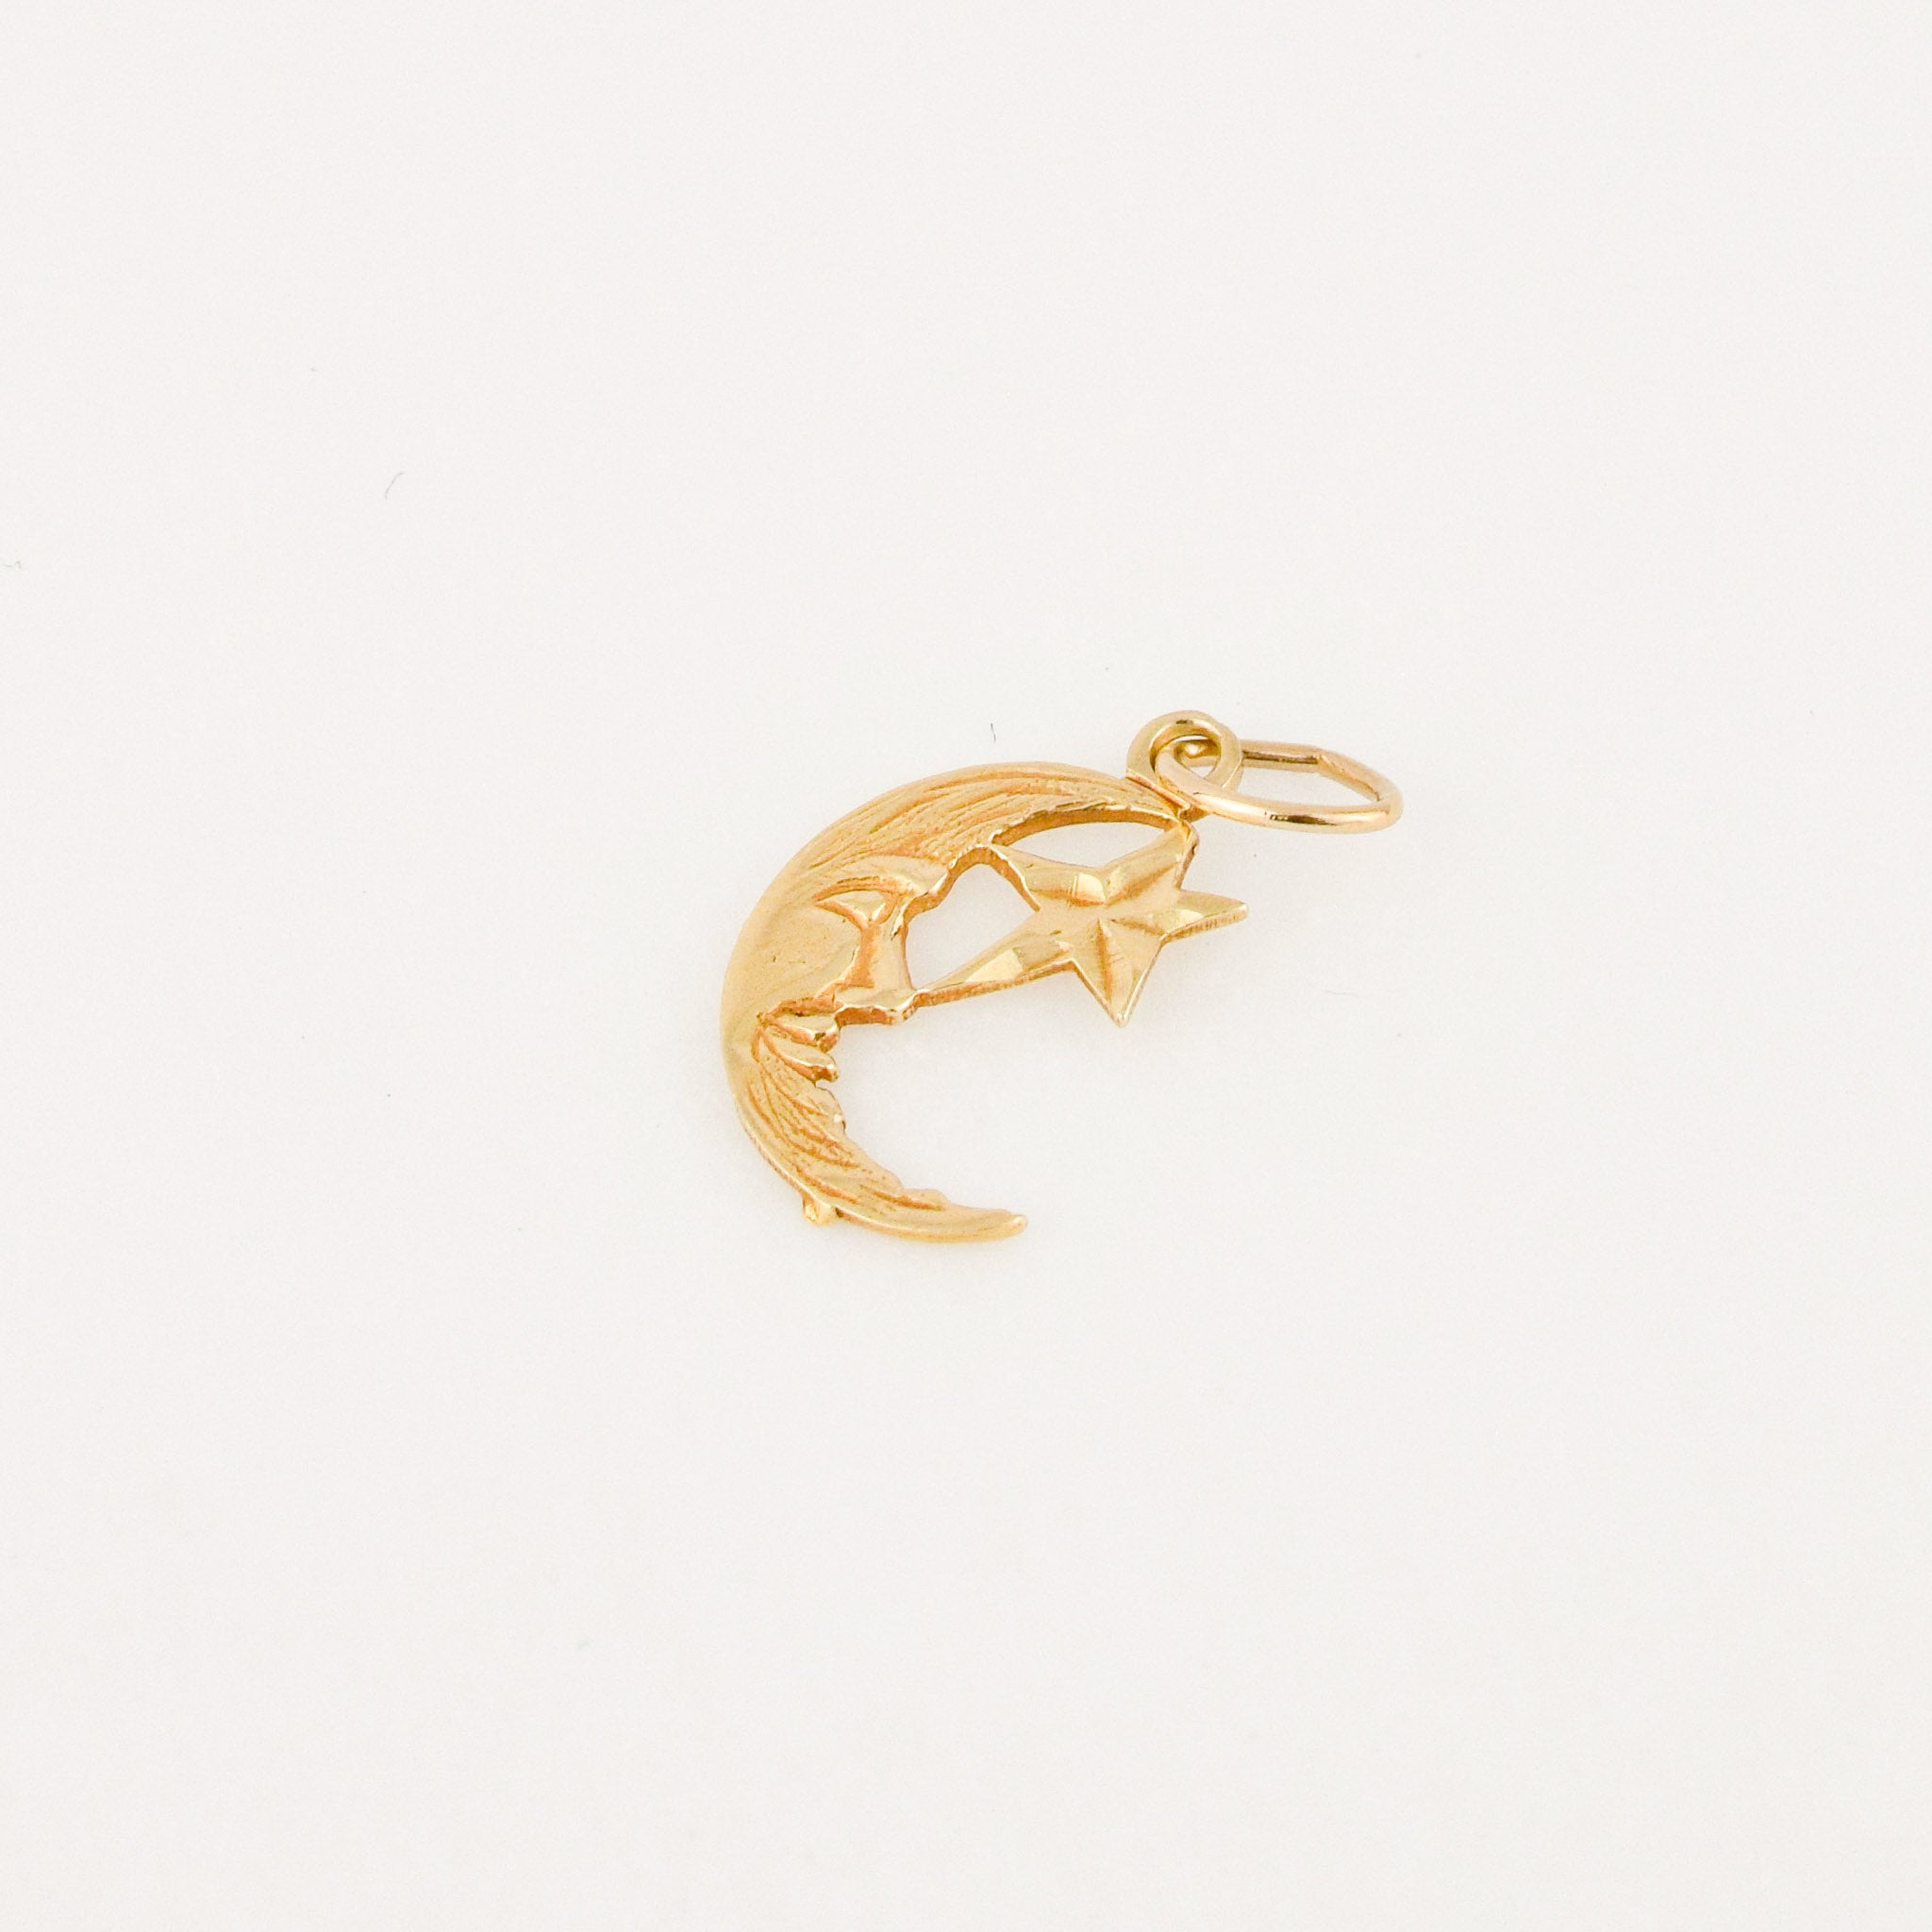 vintage gold crescent moon charm pendant